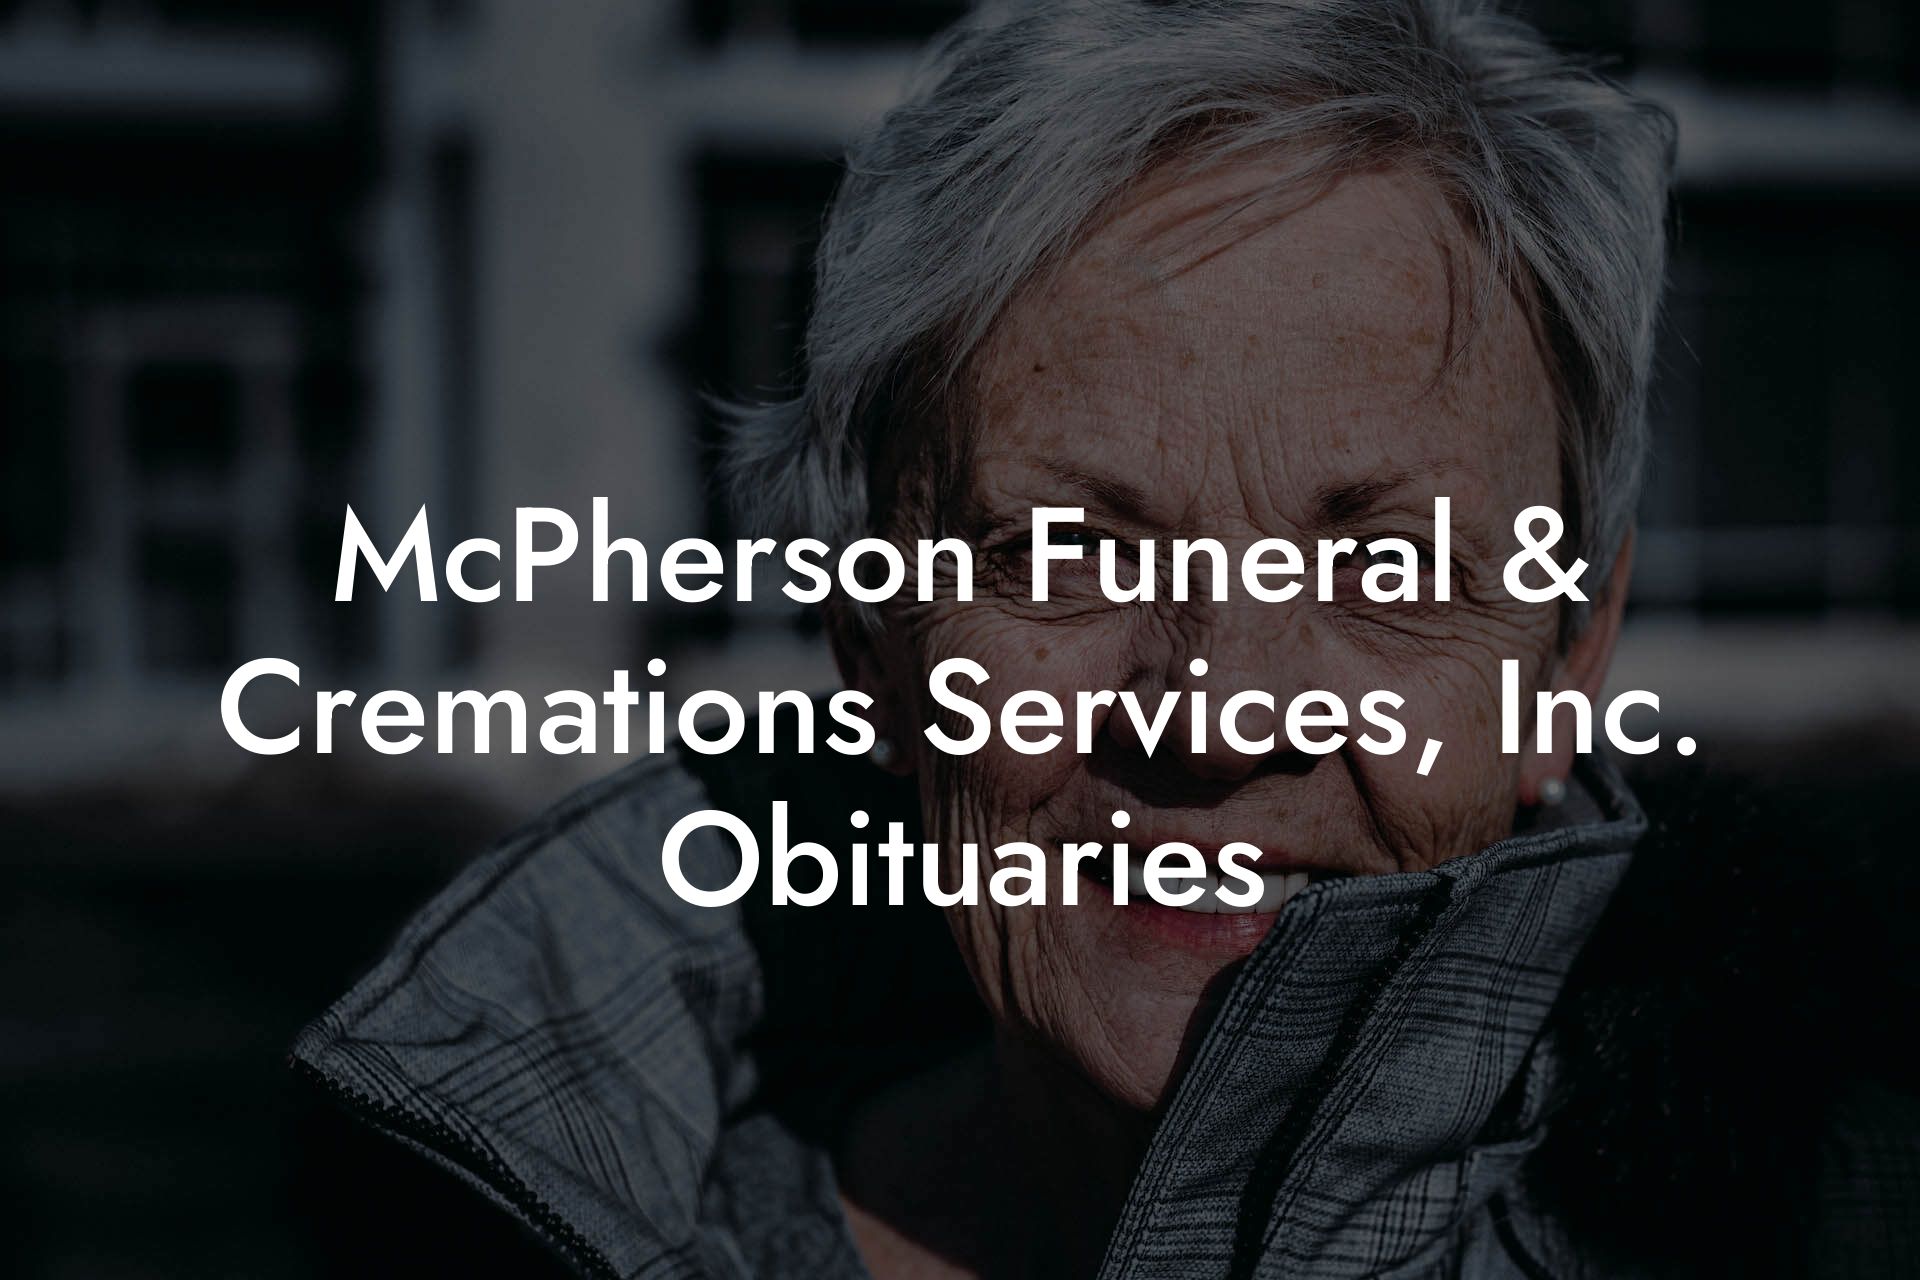 McPherson Funeral & Cremations Services, Inc. Obituaries